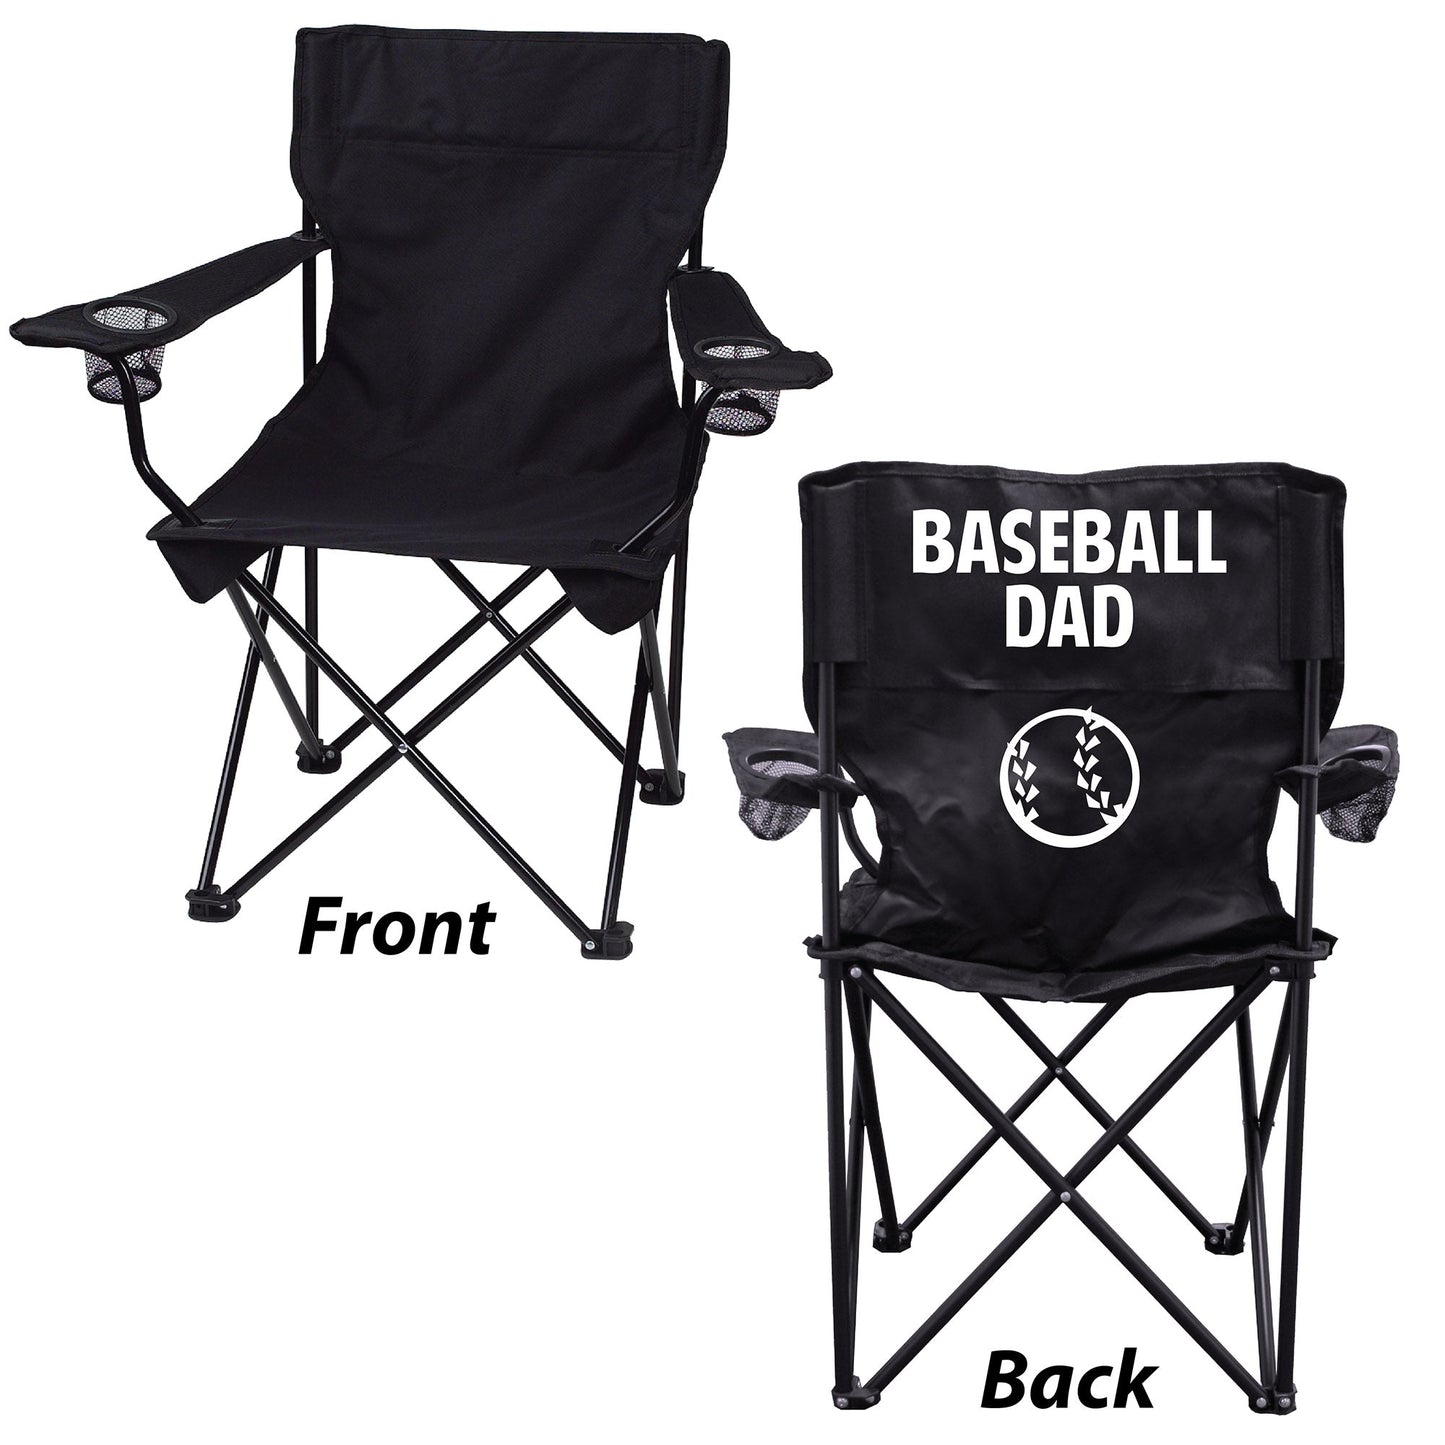 Baseball Dad Black Folding Camping Chair